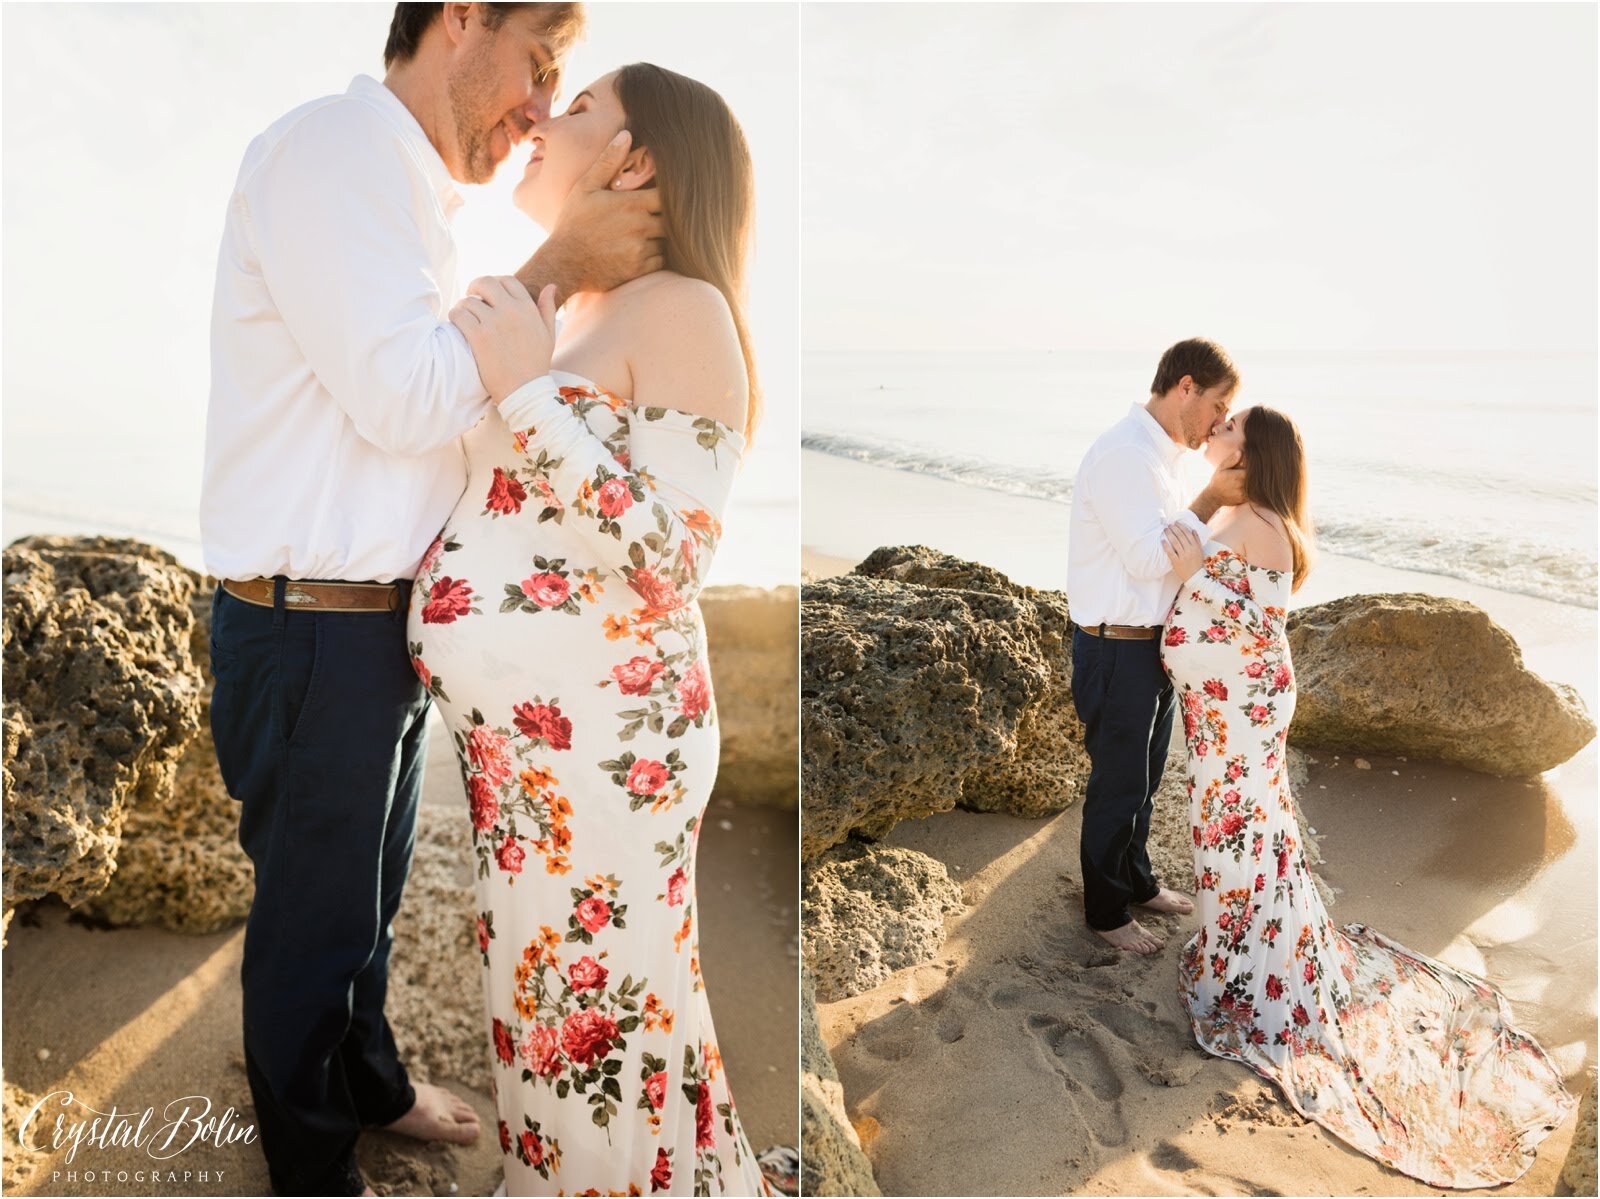 Kaylee & Brandon | Maternity Photos